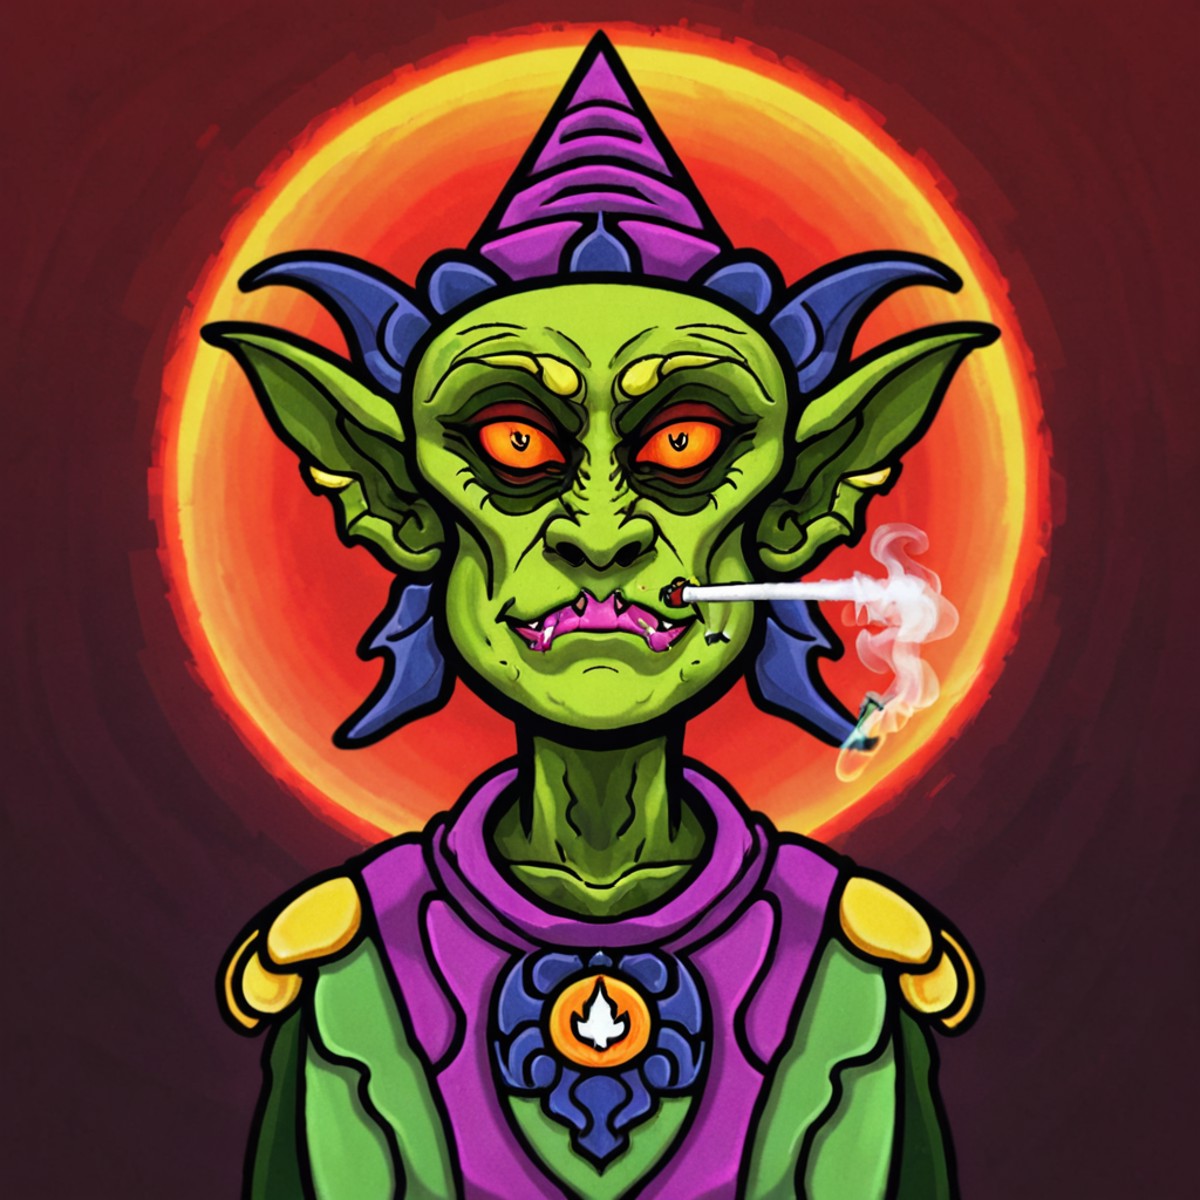 boondogglestyle, a surreal digital art rendering of an ornate goblin wizard alien circle square smoking man, sunburn, pixe...